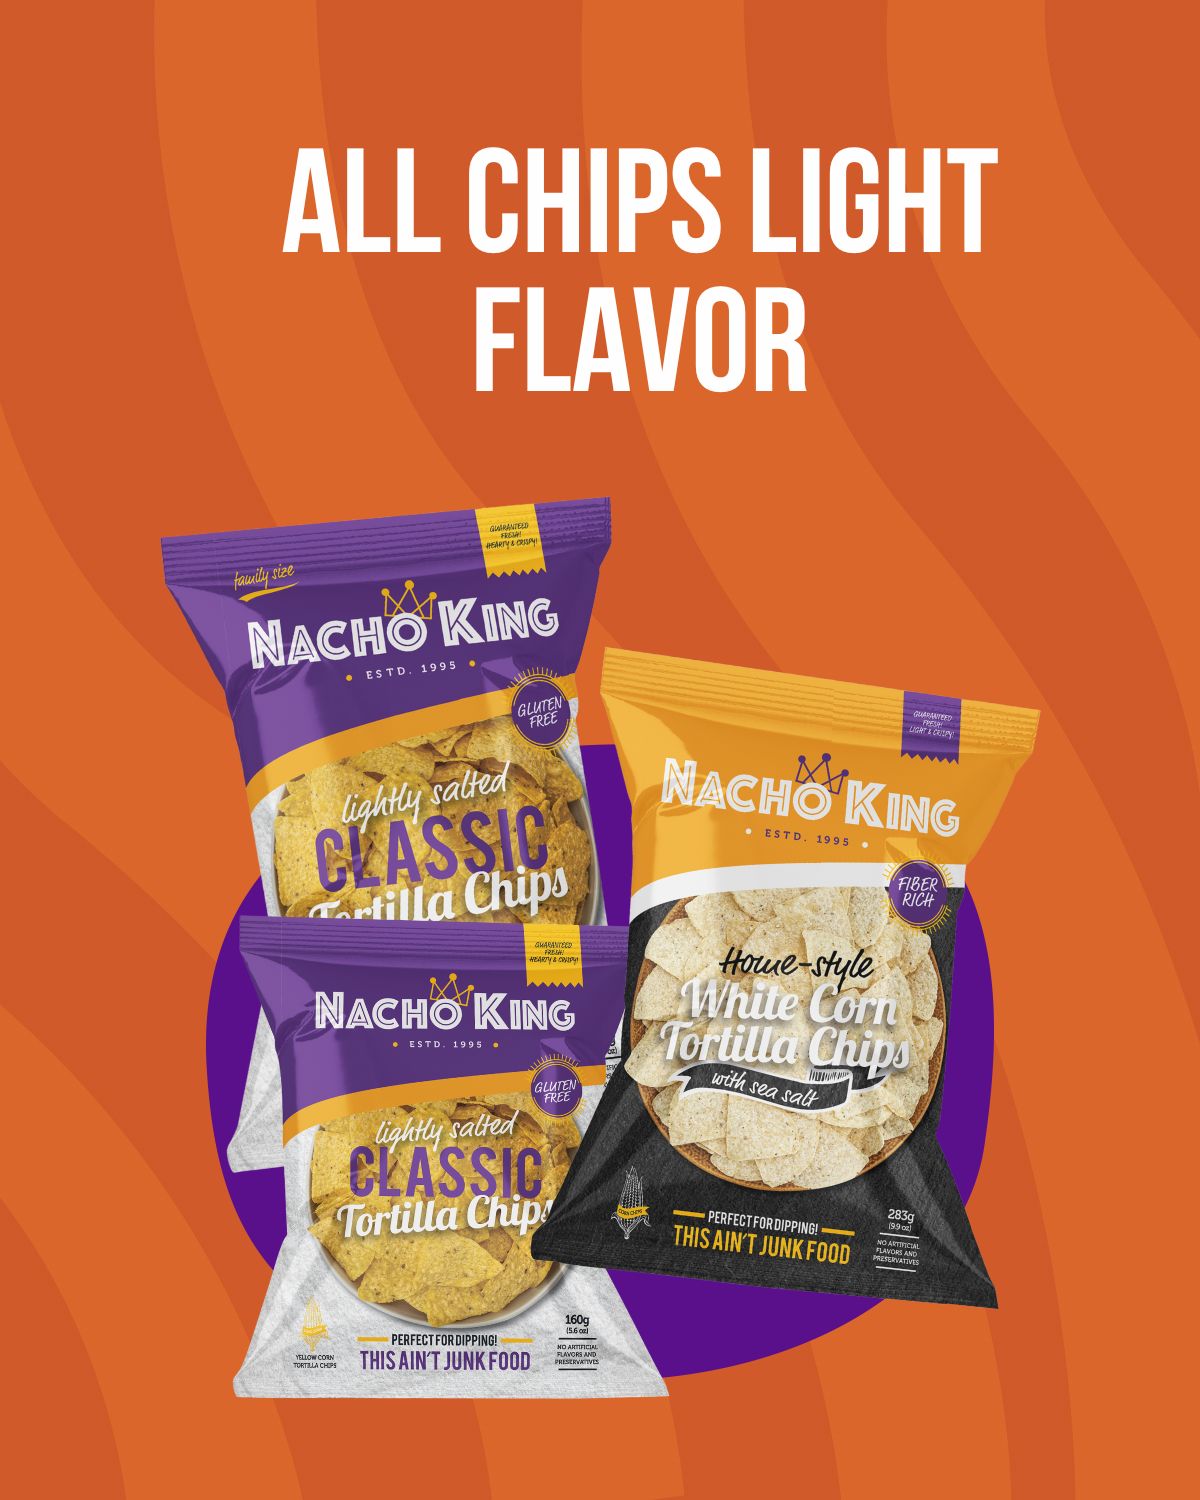 All Chips Light Flavor